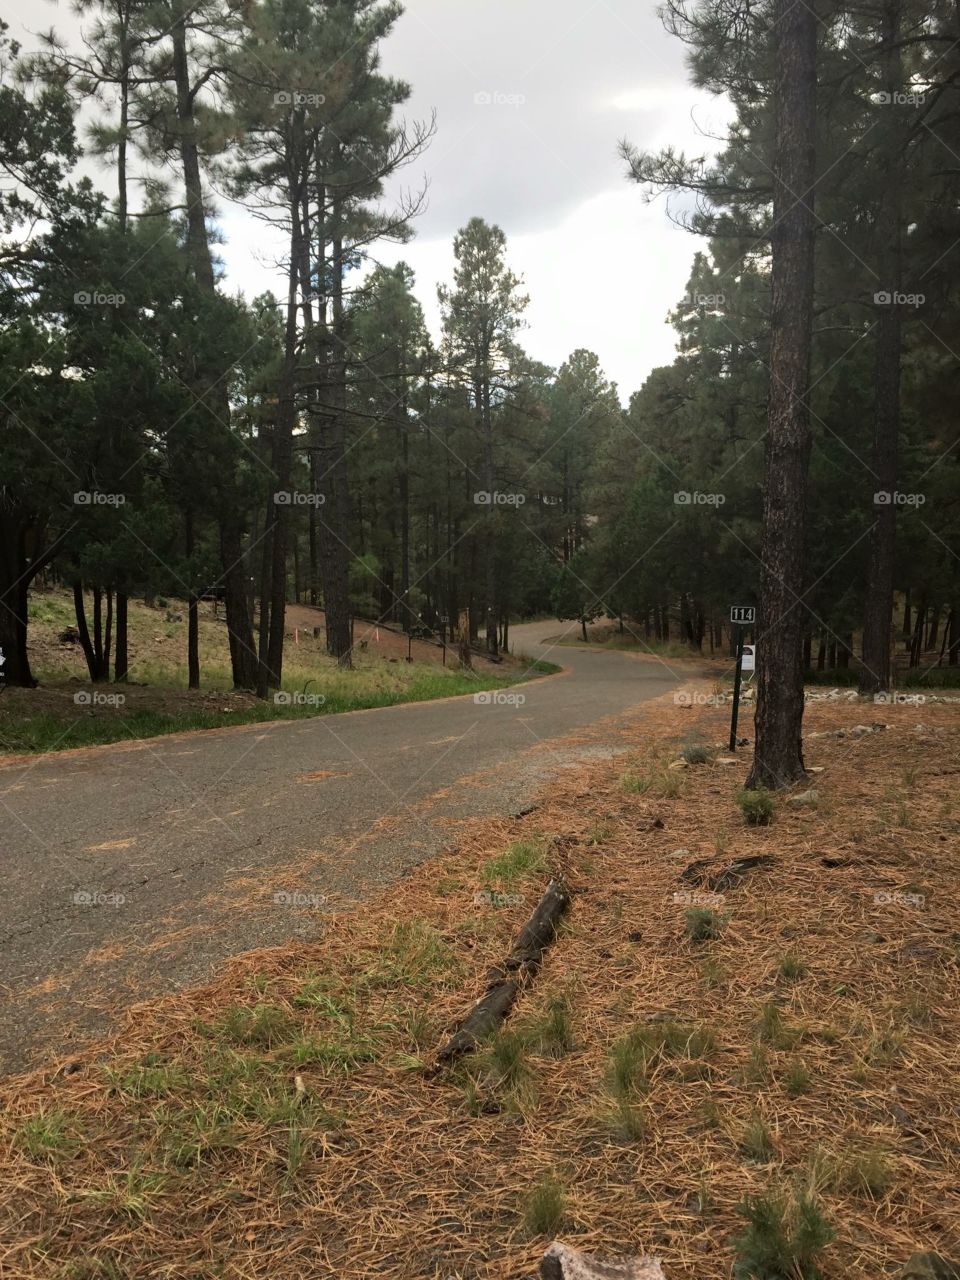 A dirt road, weaving through the mountain town of Ruidoso, New Mexico.